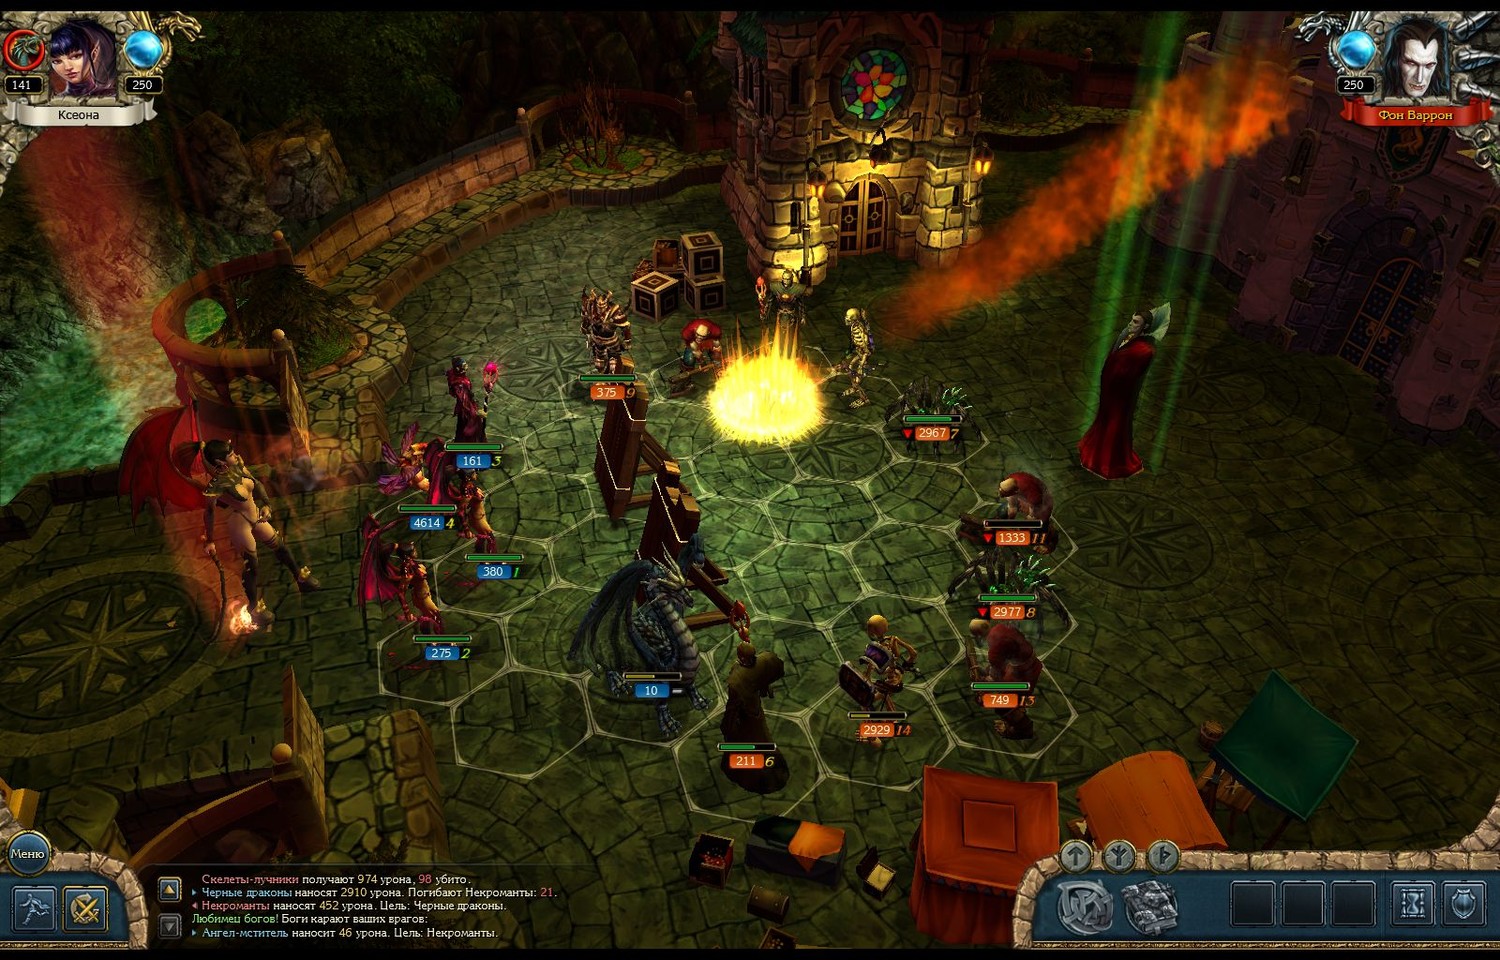 Скриншот 1 к игре King's Bounty: Воин Севера / King's Bounty: Warriors Of The North - Valhalla Edition (2012) PC | RePack от xatab